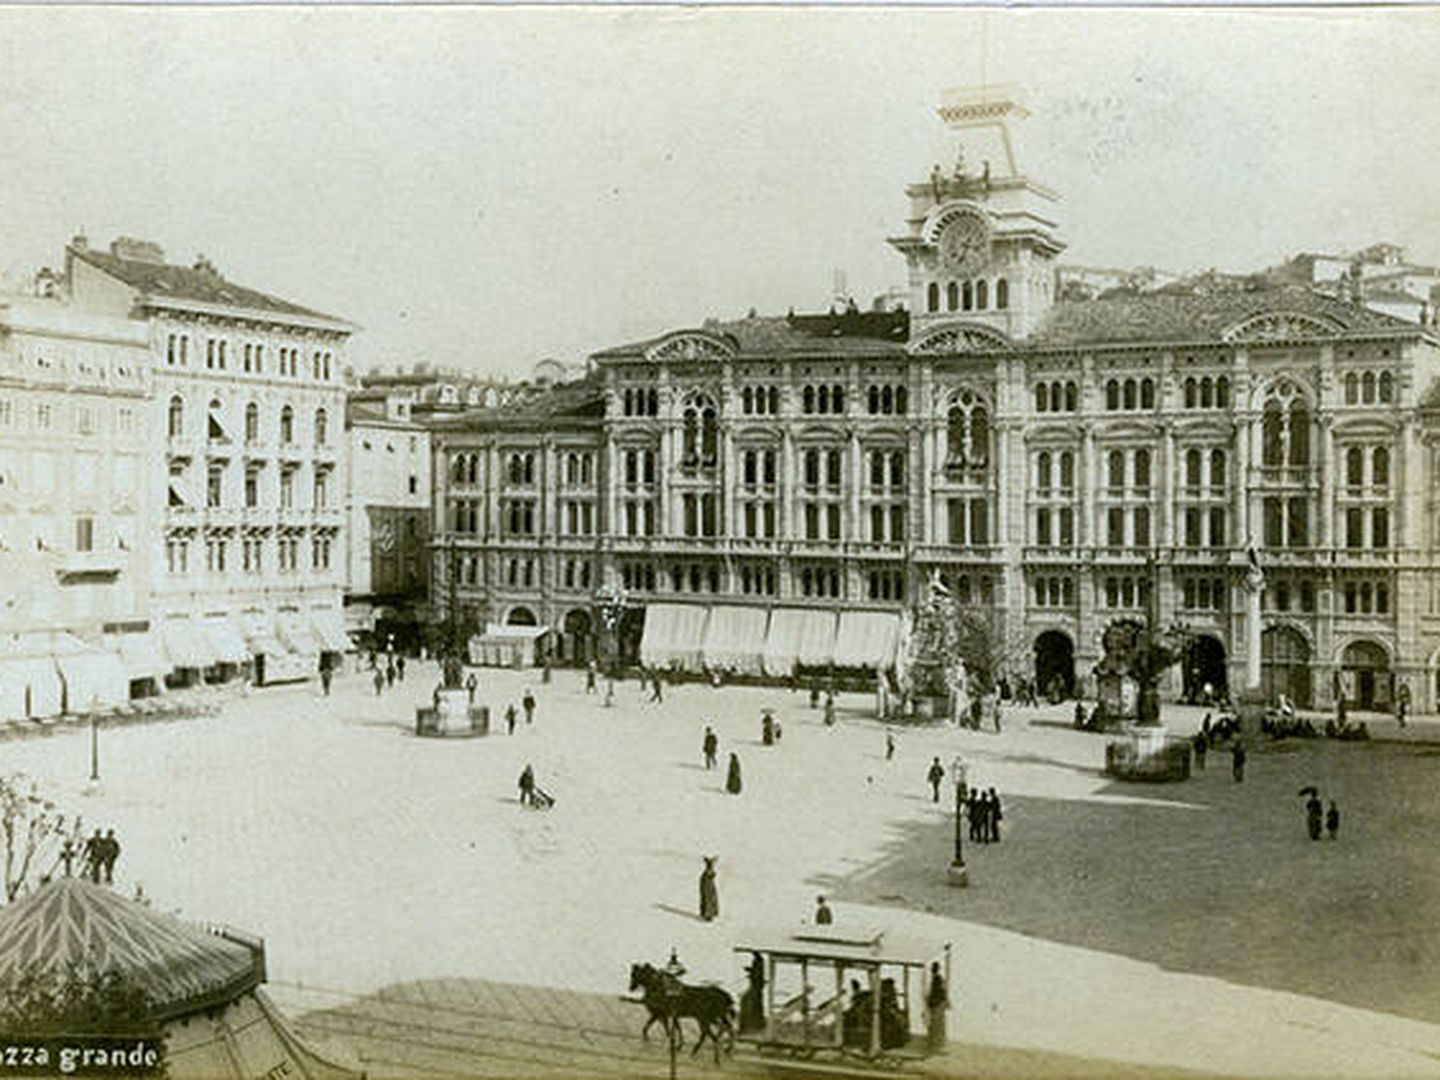 'Piazza' Grande de Trieste.